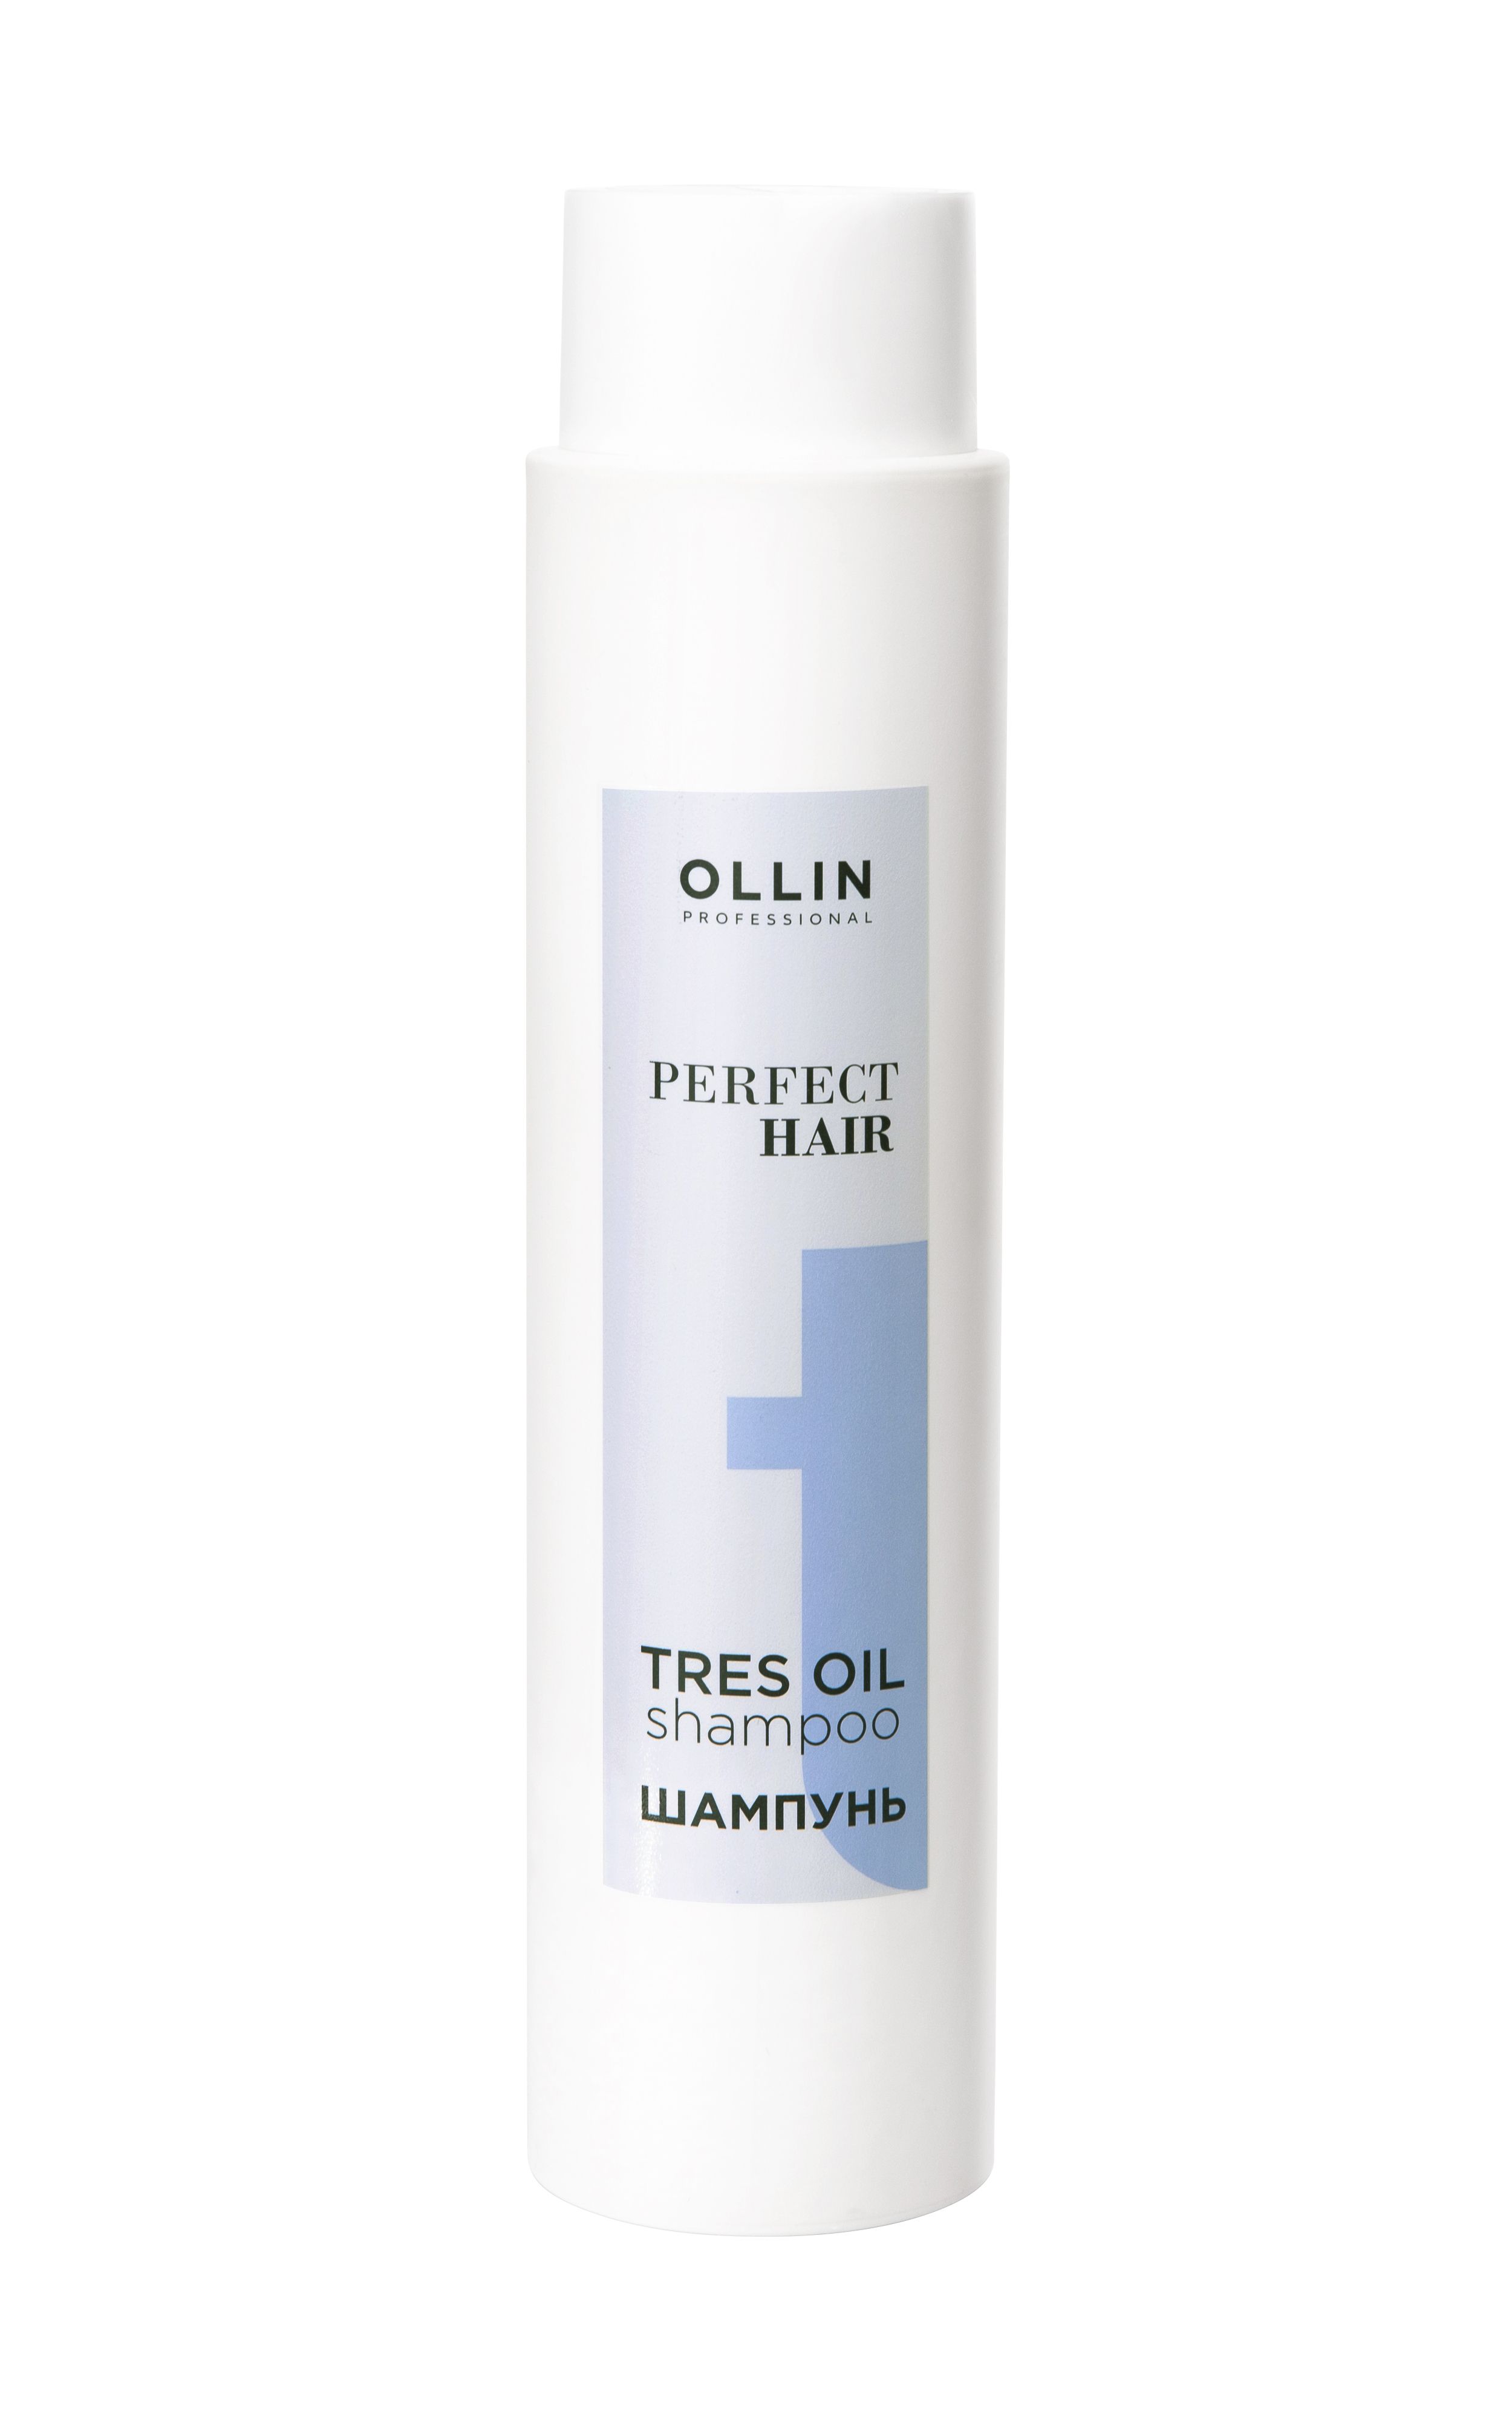 Ollin, Шампунь «Tres Oil» серии «Perfect Hair», Фото интернет-магазин Премиум-Косметика.РФ